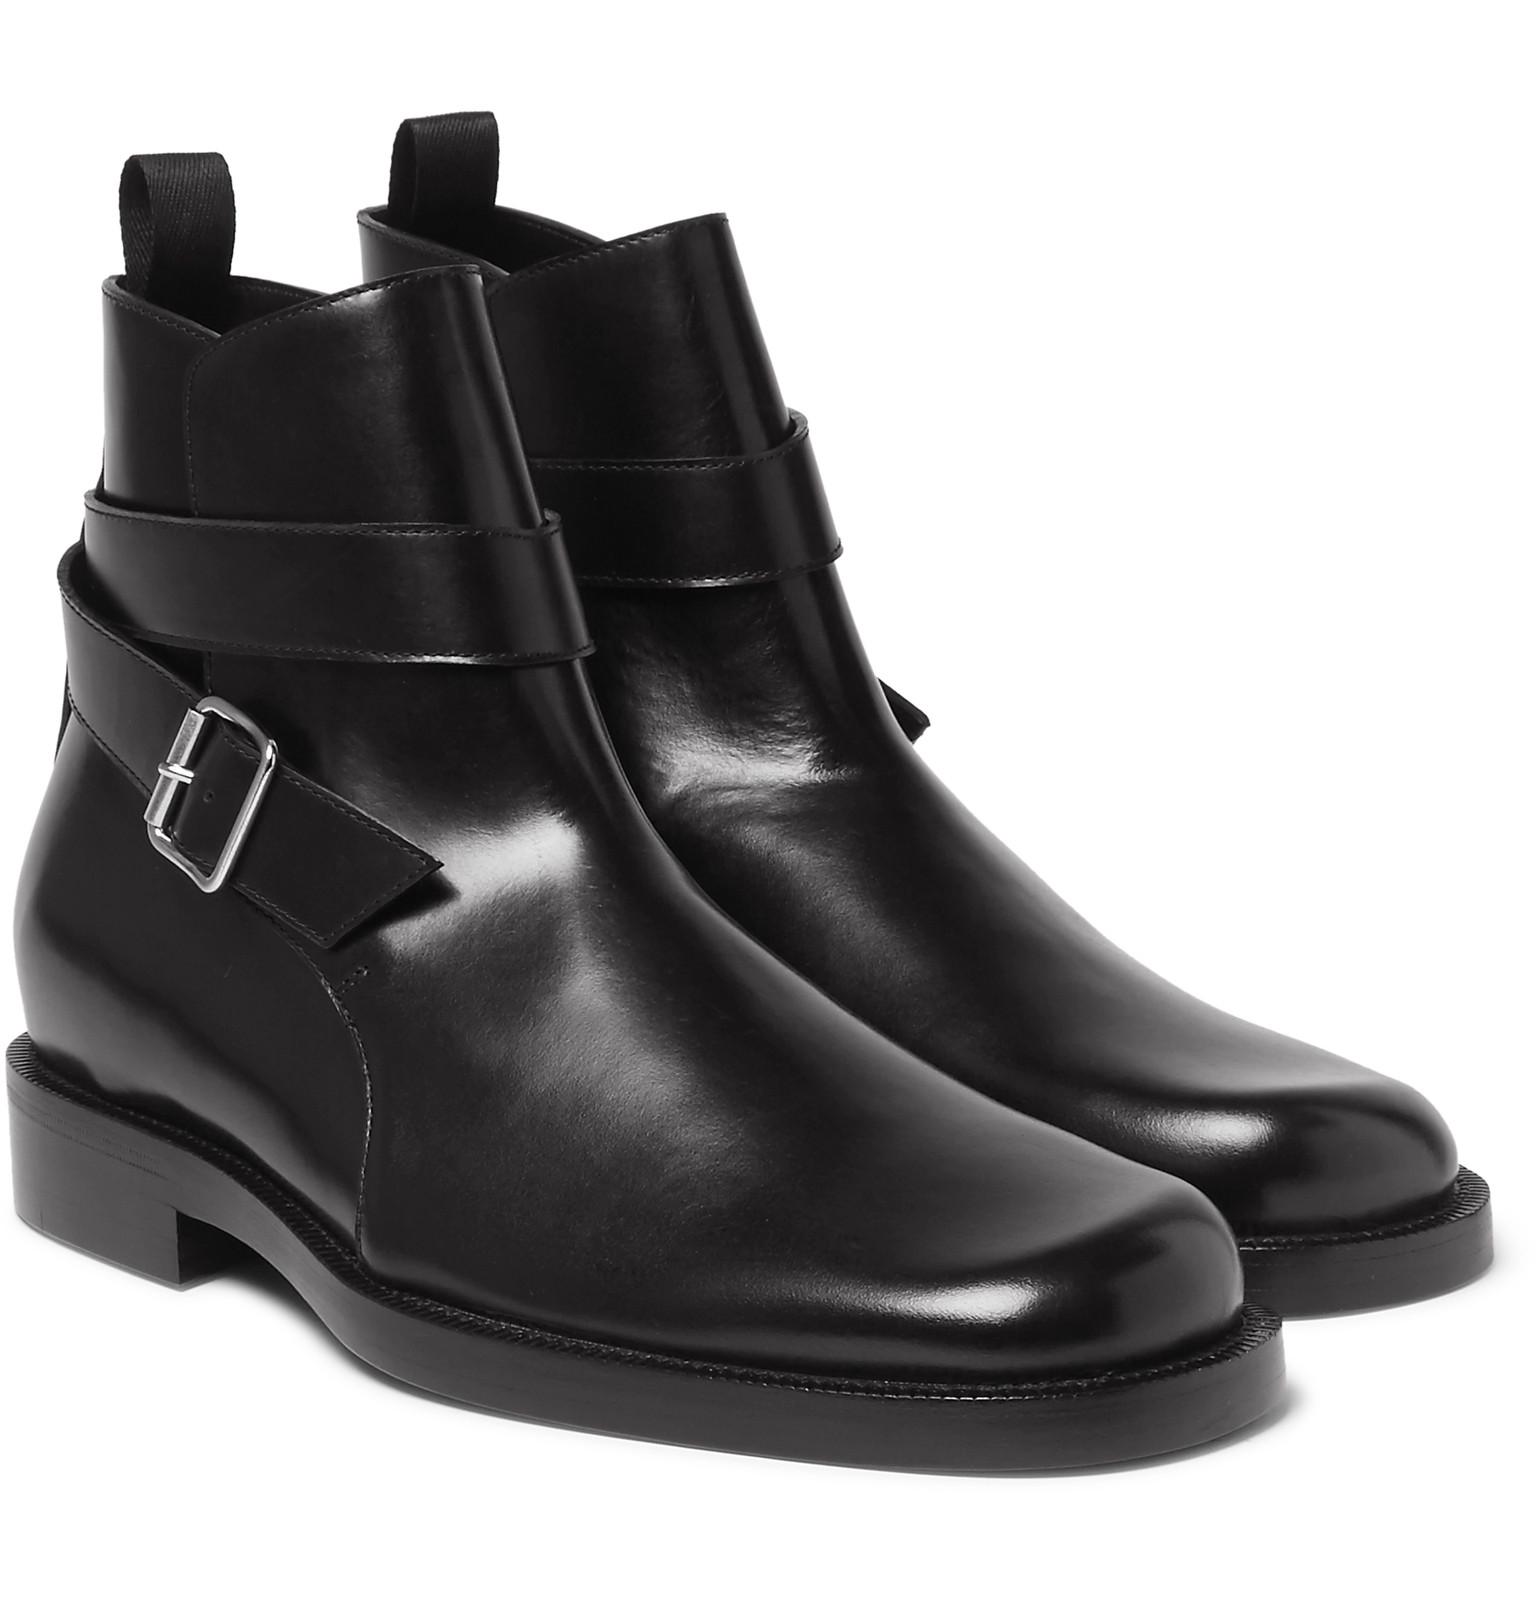 Lyst - Balenciaga Leather Jodhpur Boots in Black for Men